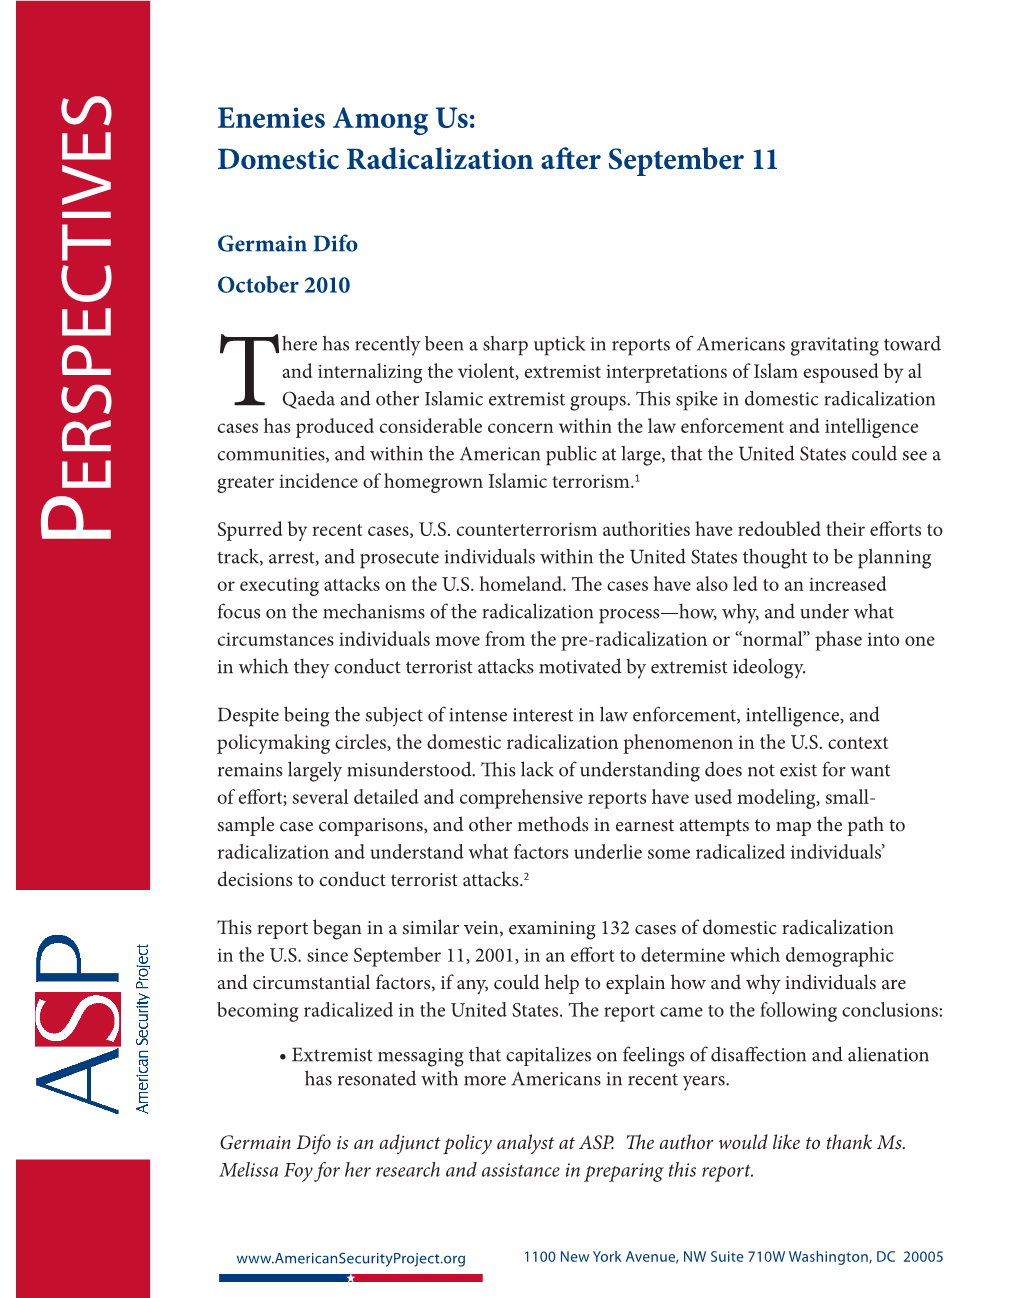 Enemies Among Us: Domestic Radicalization After September 11